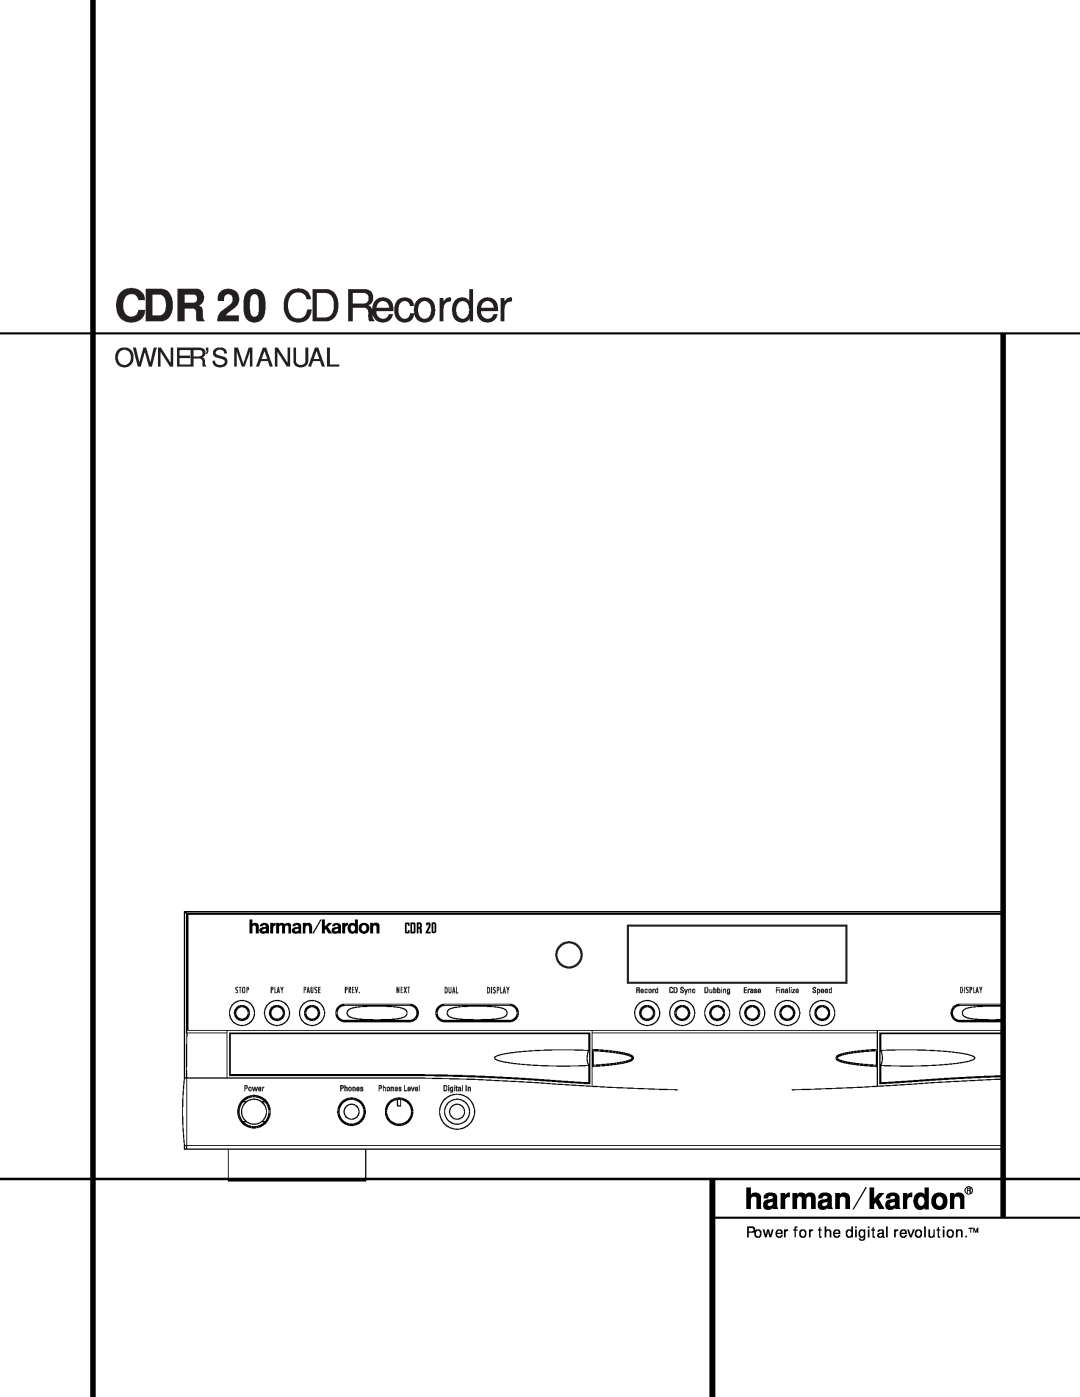 Harman-Kardon 76, CD Player owner manual CDR 20 CD Recorder 